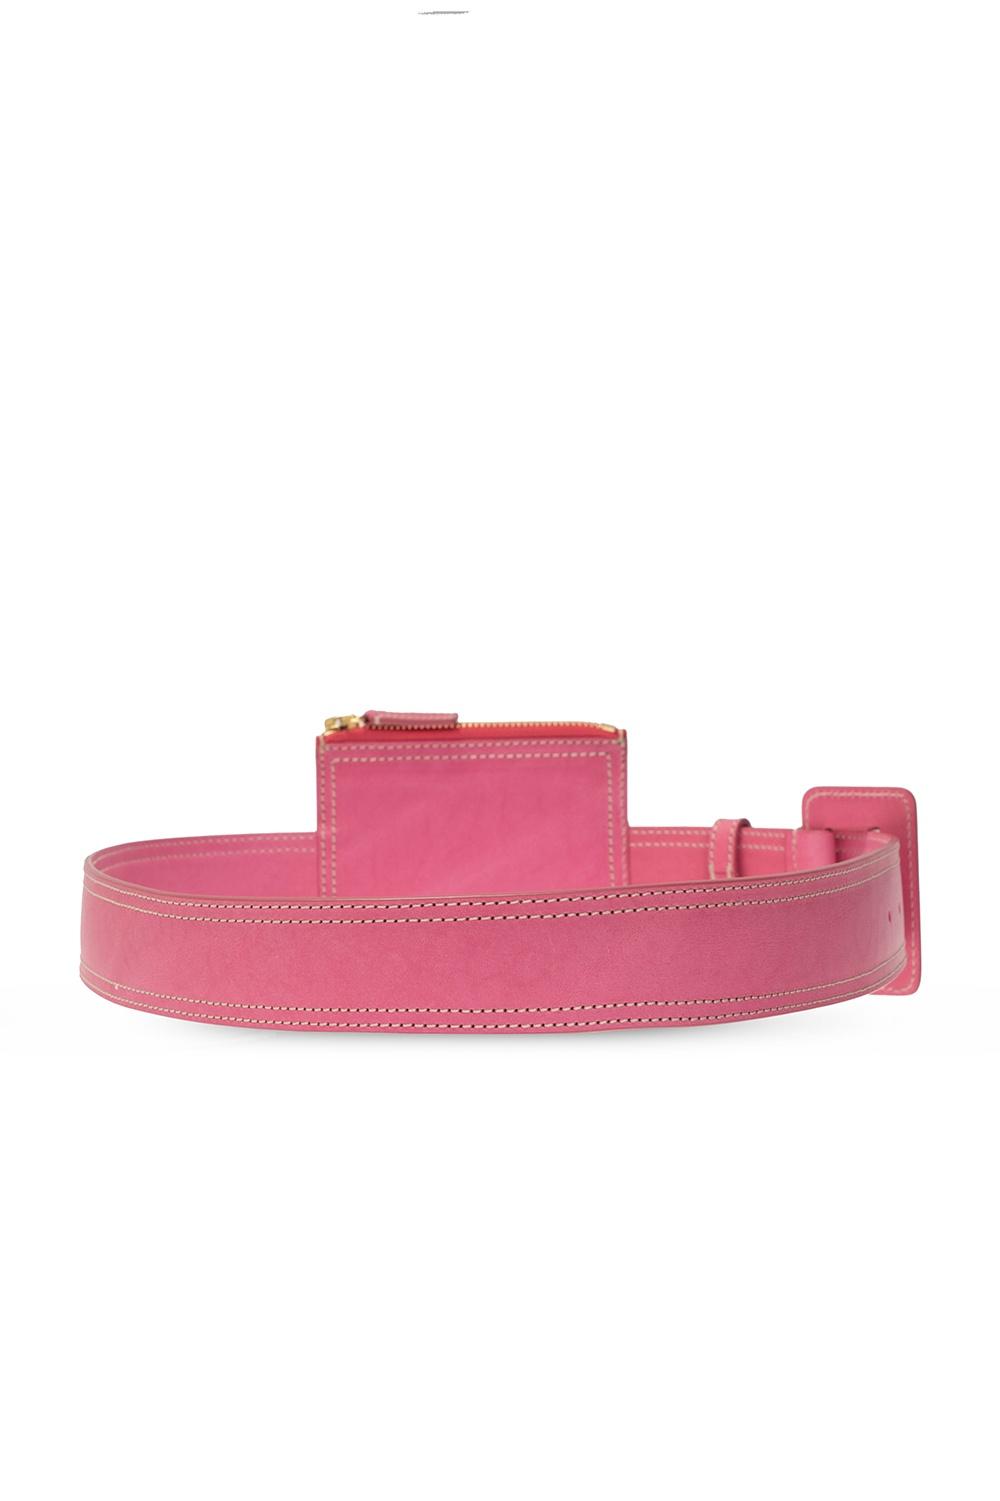 Jacquemus Leather 'la Ceinture Carree' Belt Bag in Pink - Lyst